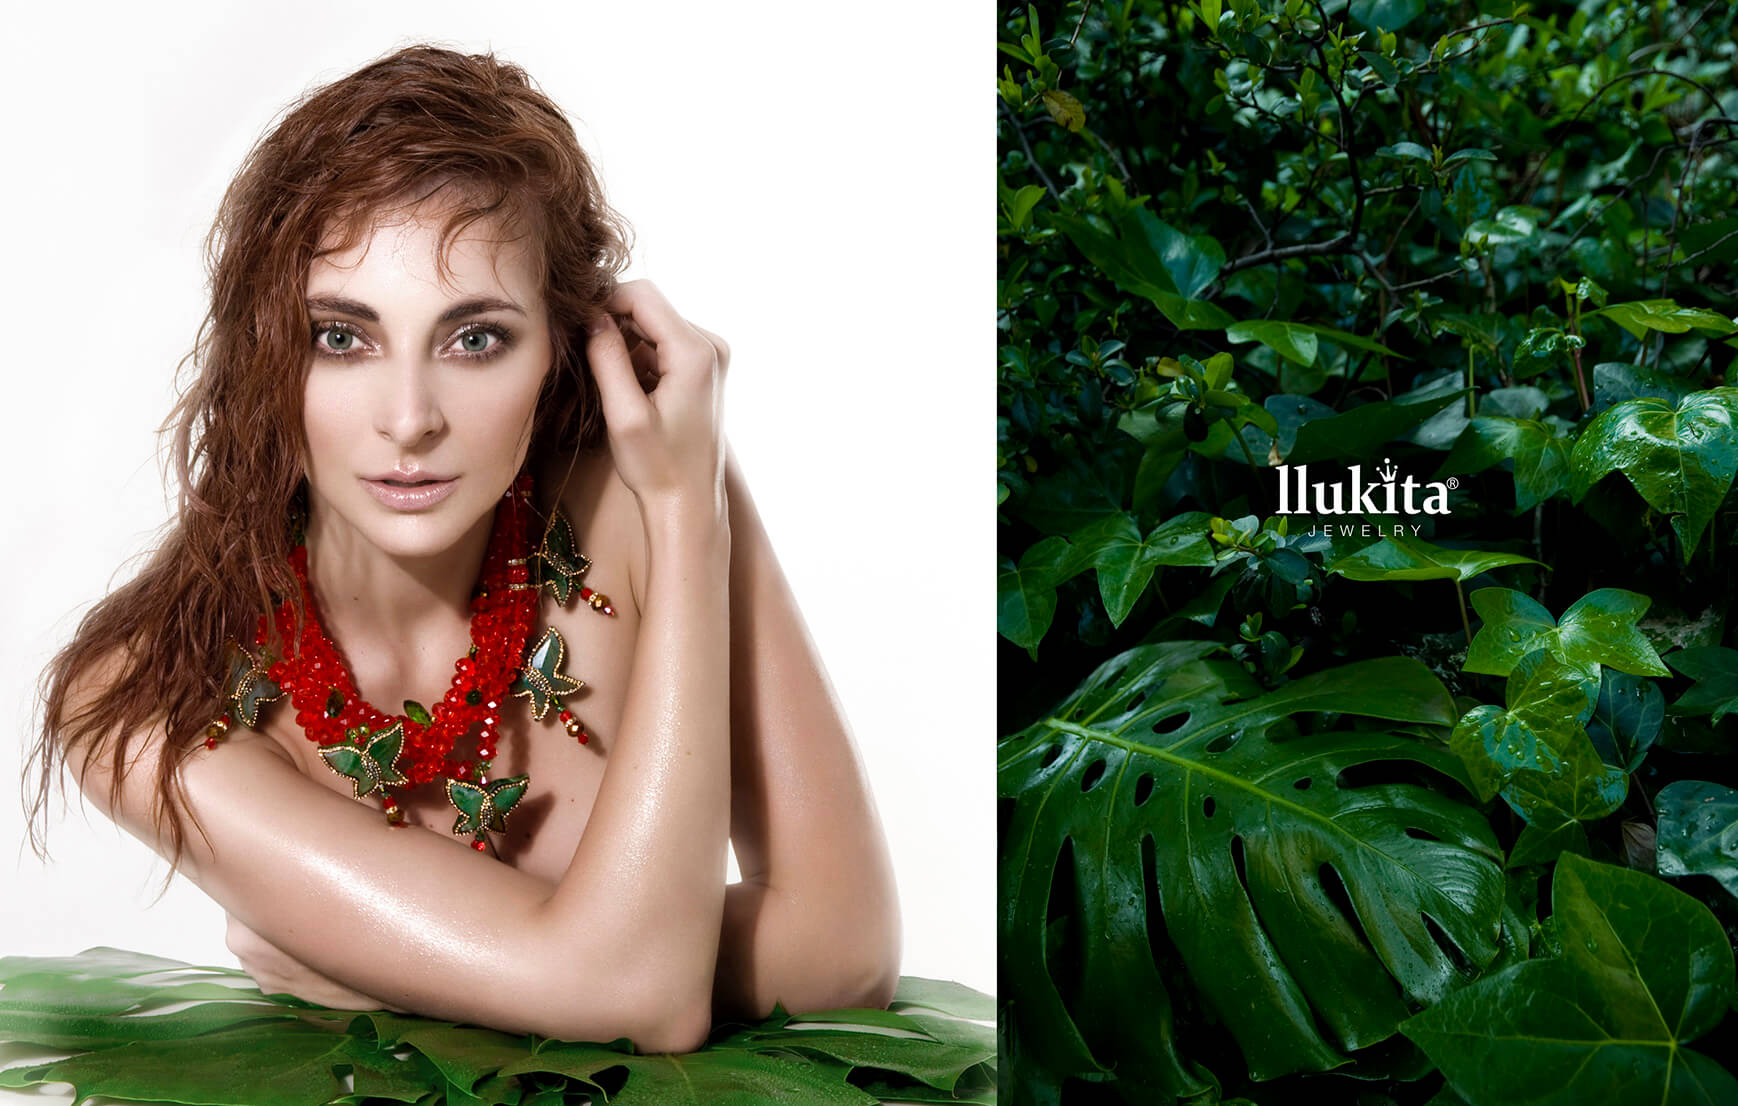 Angel-Ruiz-Ruiz--Fashion-Photographer-Llukita-Jewelry-Campaig-Spring-Summer-beach-jungle-1738x1106